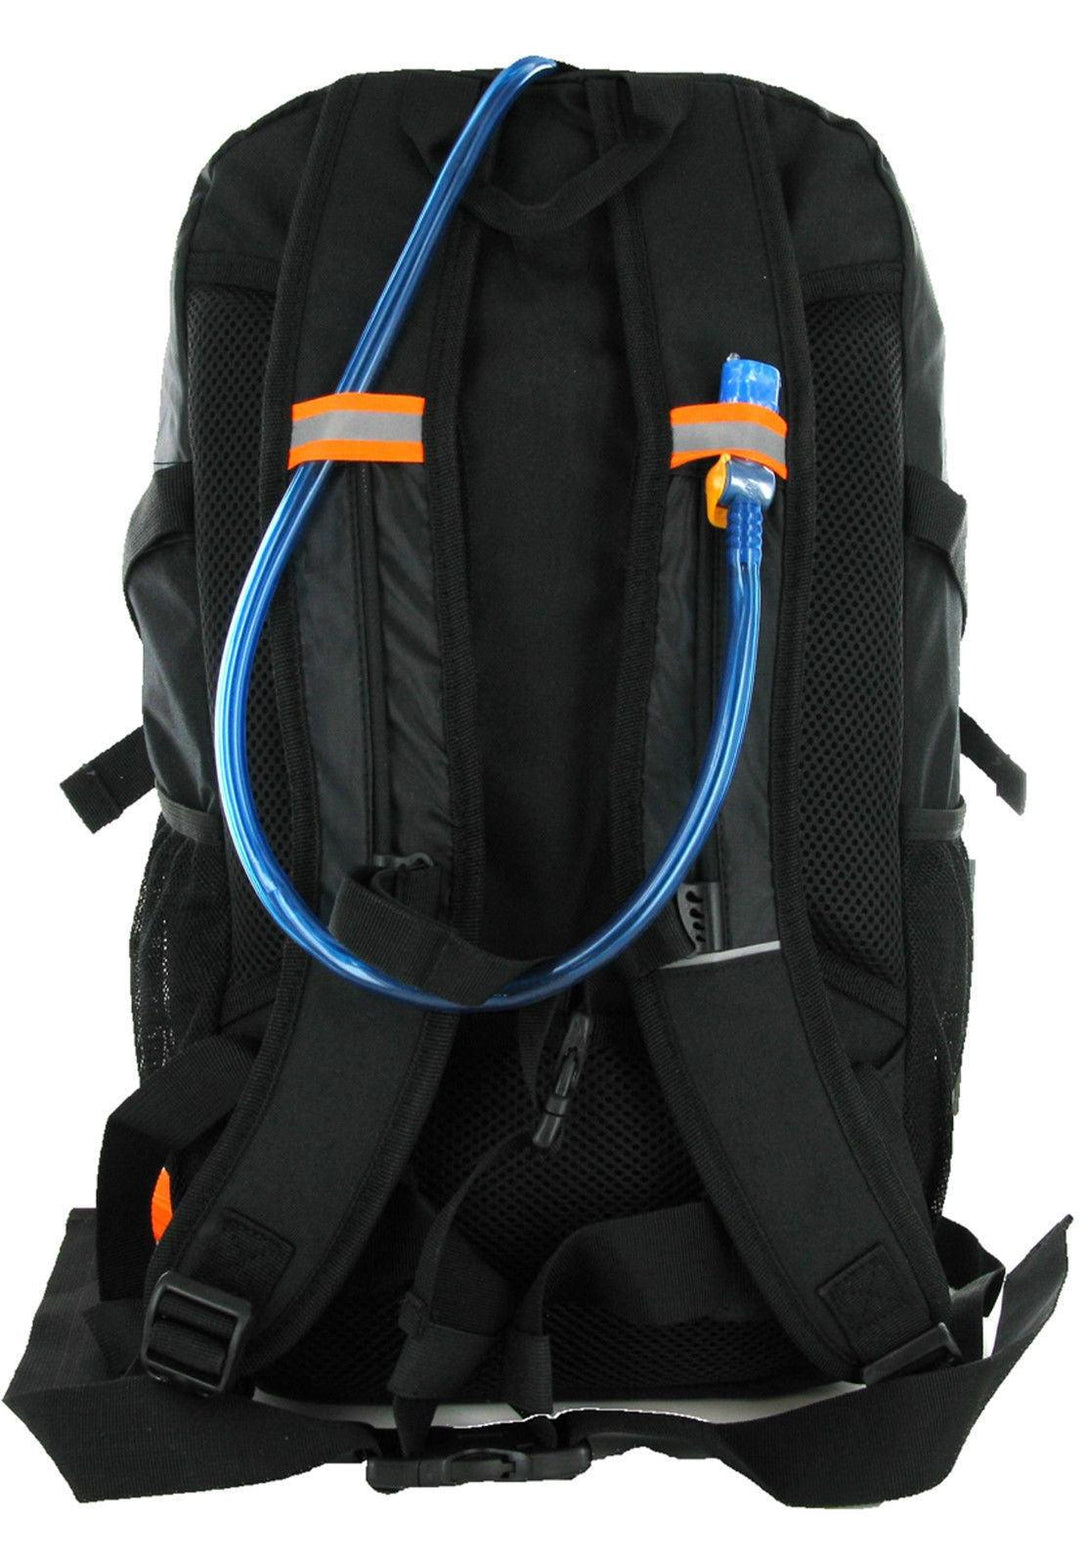 Hi-Tec Mountain Hydration Backpack - 20L - Towsure